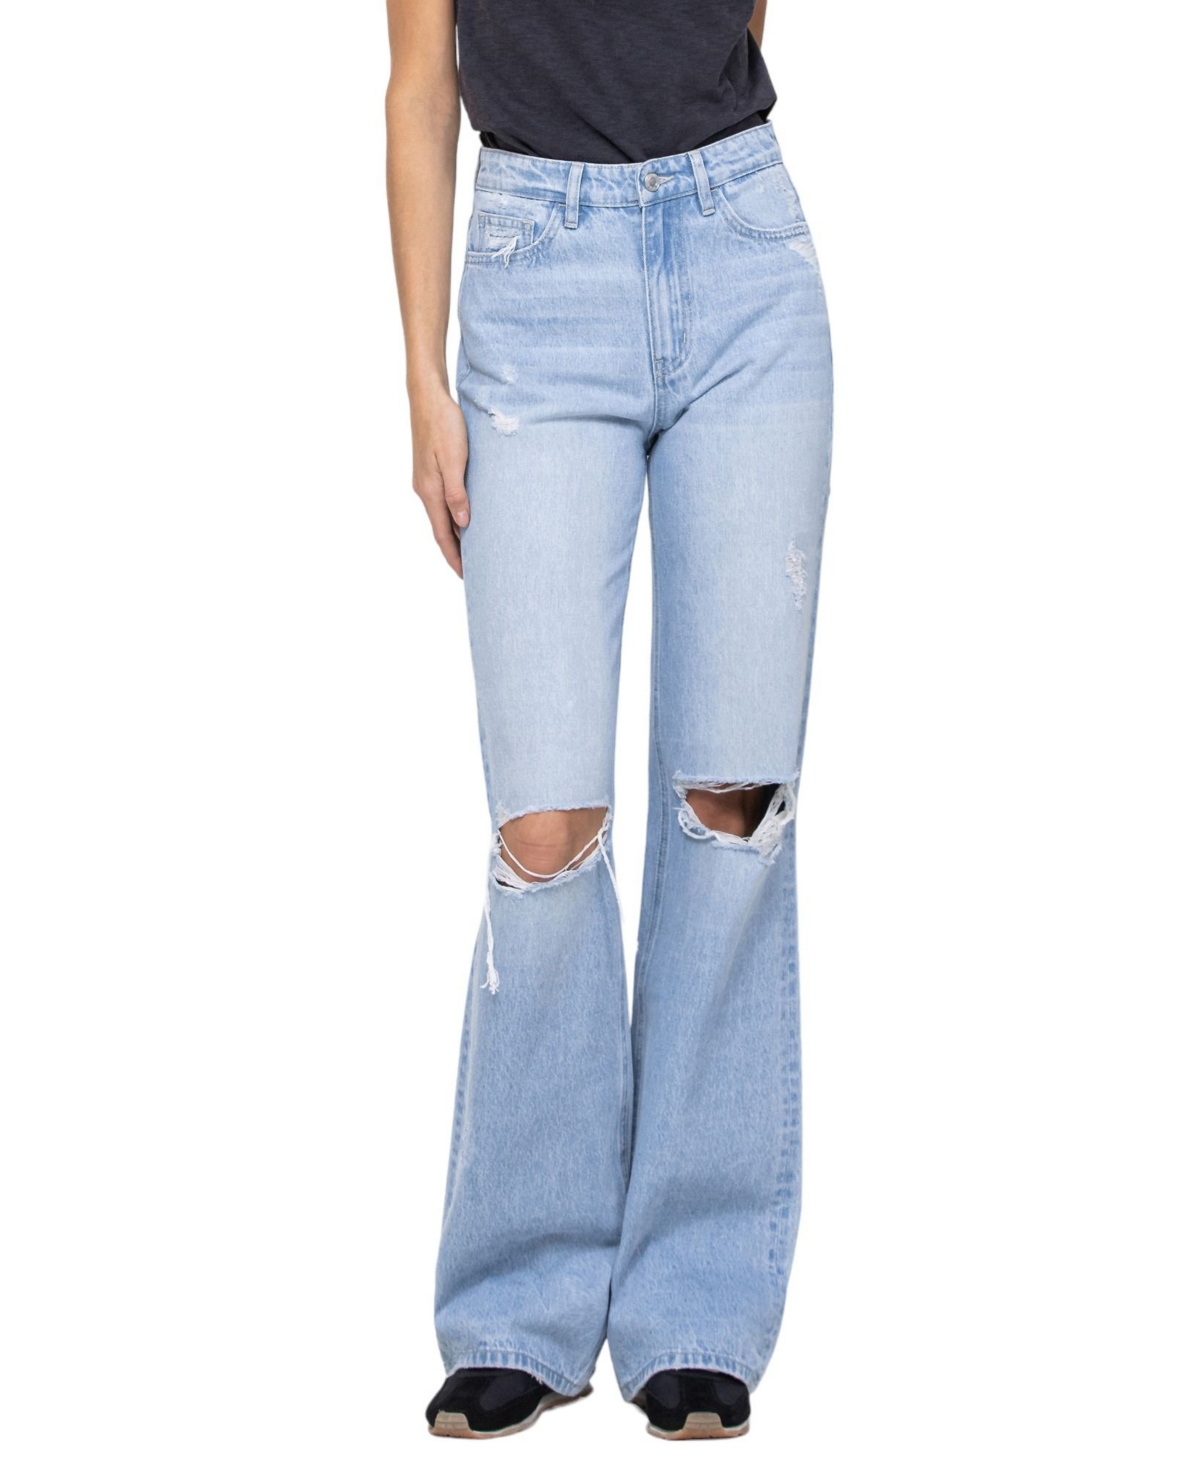 Women's Super High Rise 90's Vintage-like Flare Jeans - Sunny plains blue